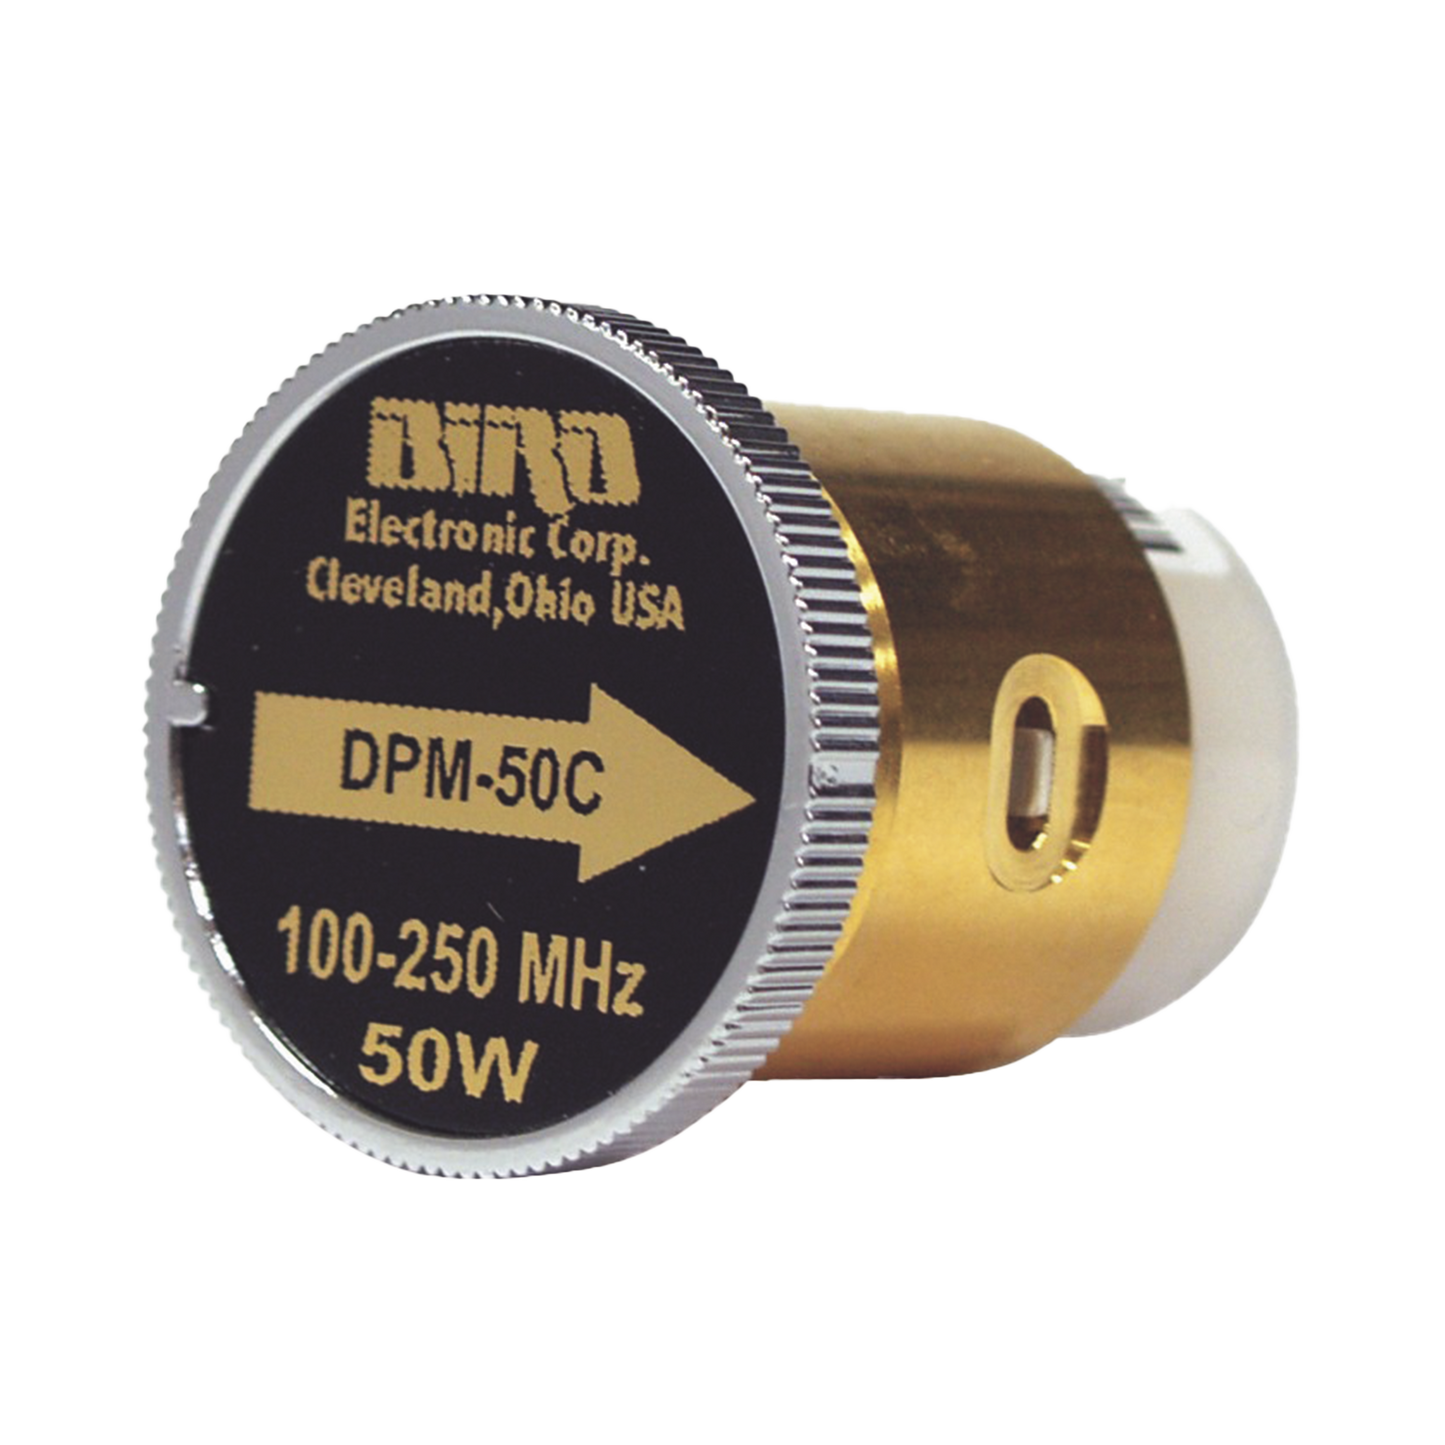 Elemento DPM para Potencia Reflejada de 1.25 W - 50 W, 100-250 MHz, para Sensor 5014.